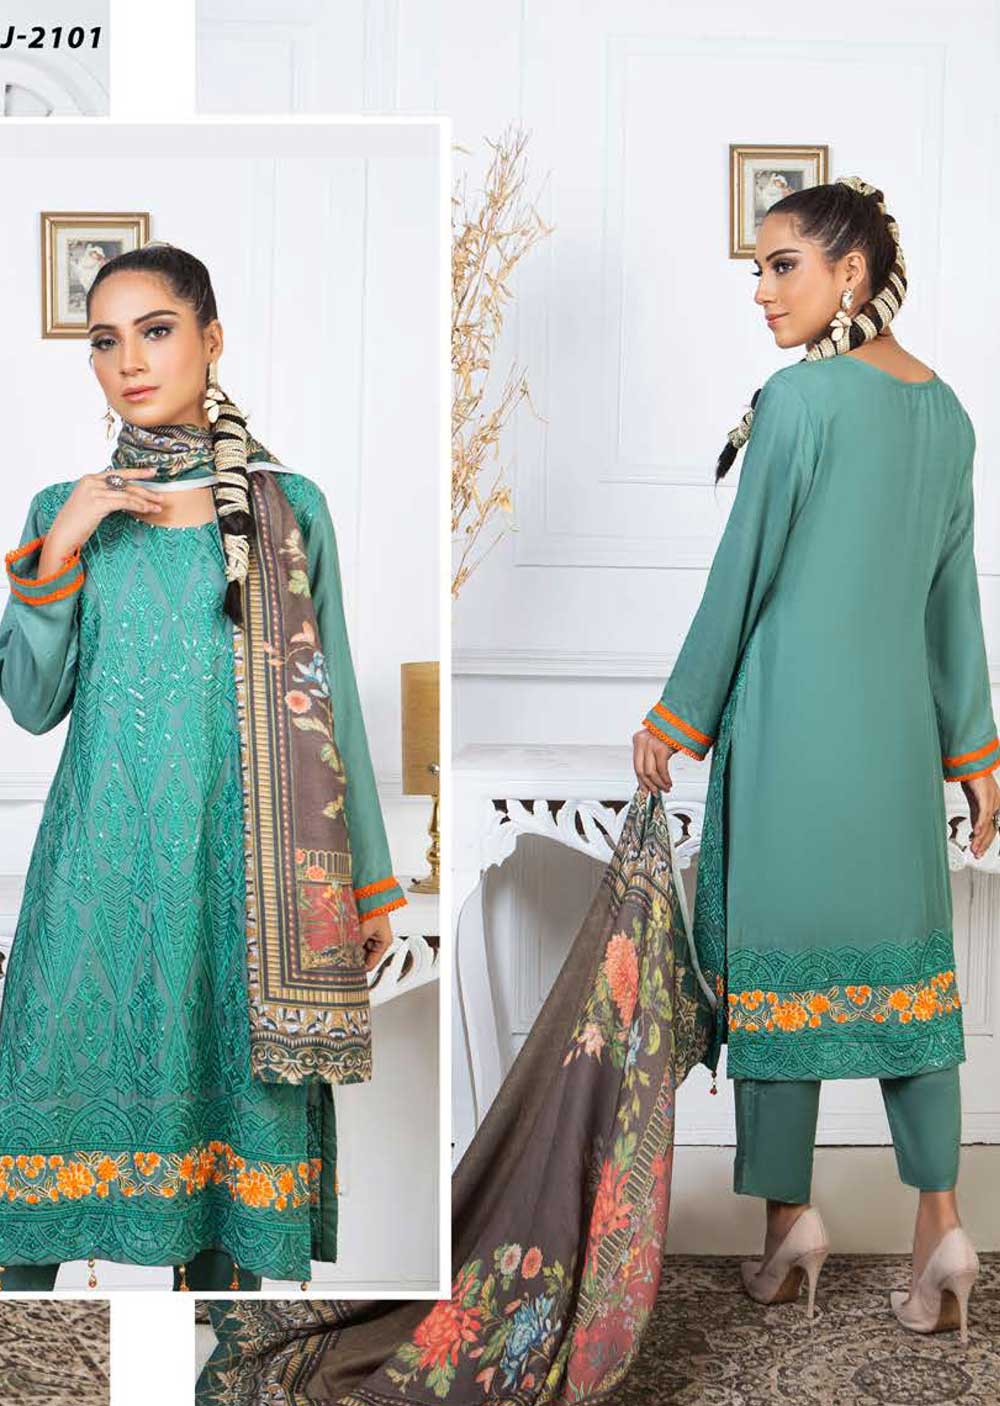 KDJ-2101 - Readymade - Khadijah Vol 21 Designer Suit by Nasir's - Memsaab Online